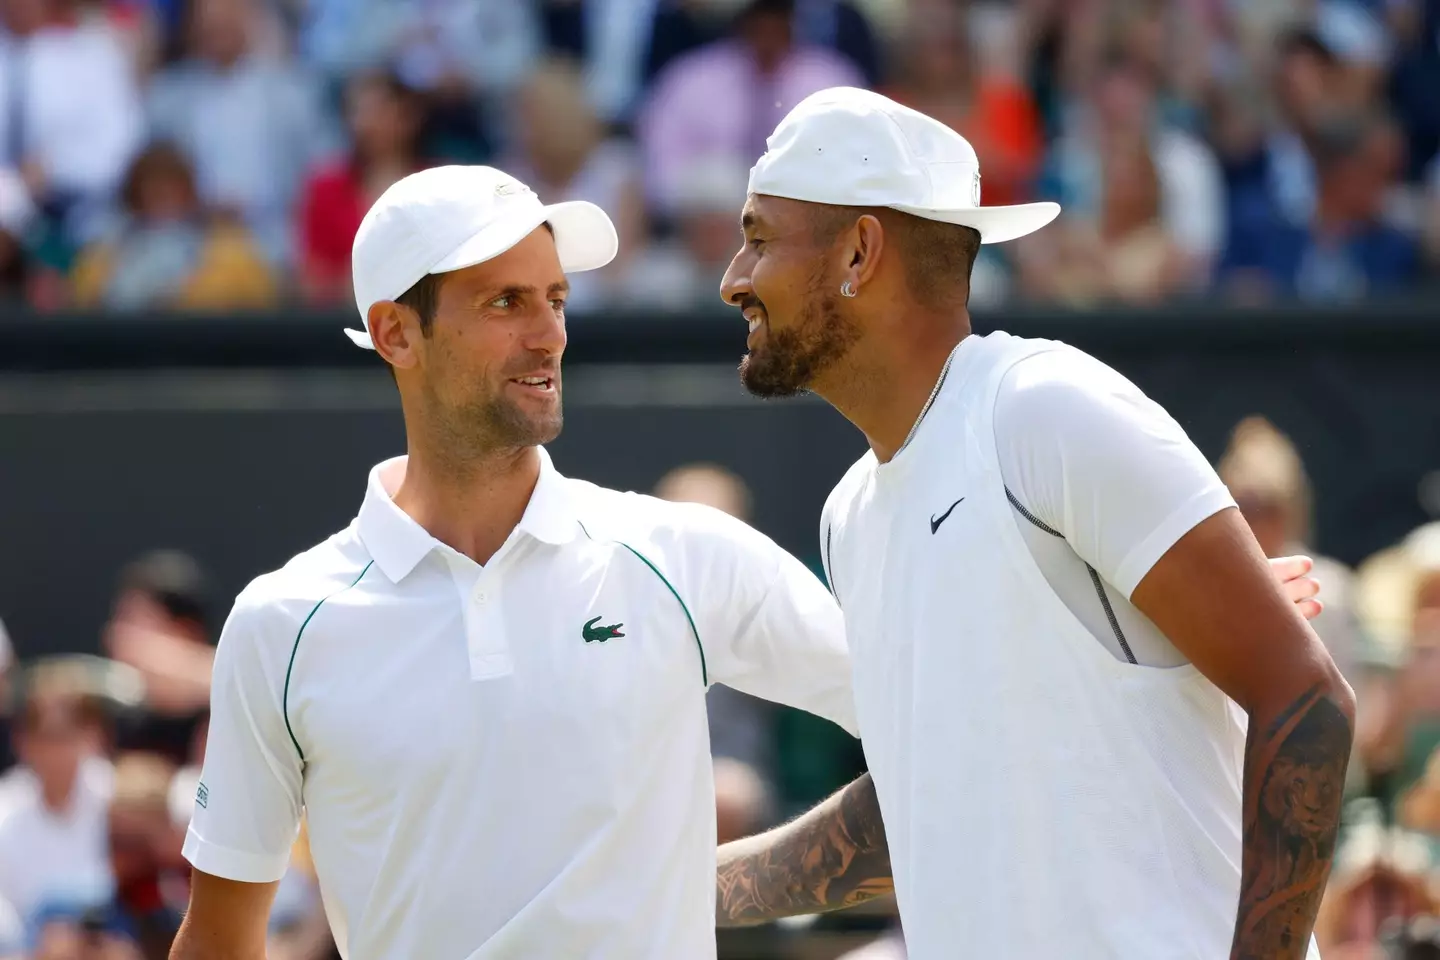 Novak Djokovic and Nick Kyrgios went head to head in the Wimbledon men's final.